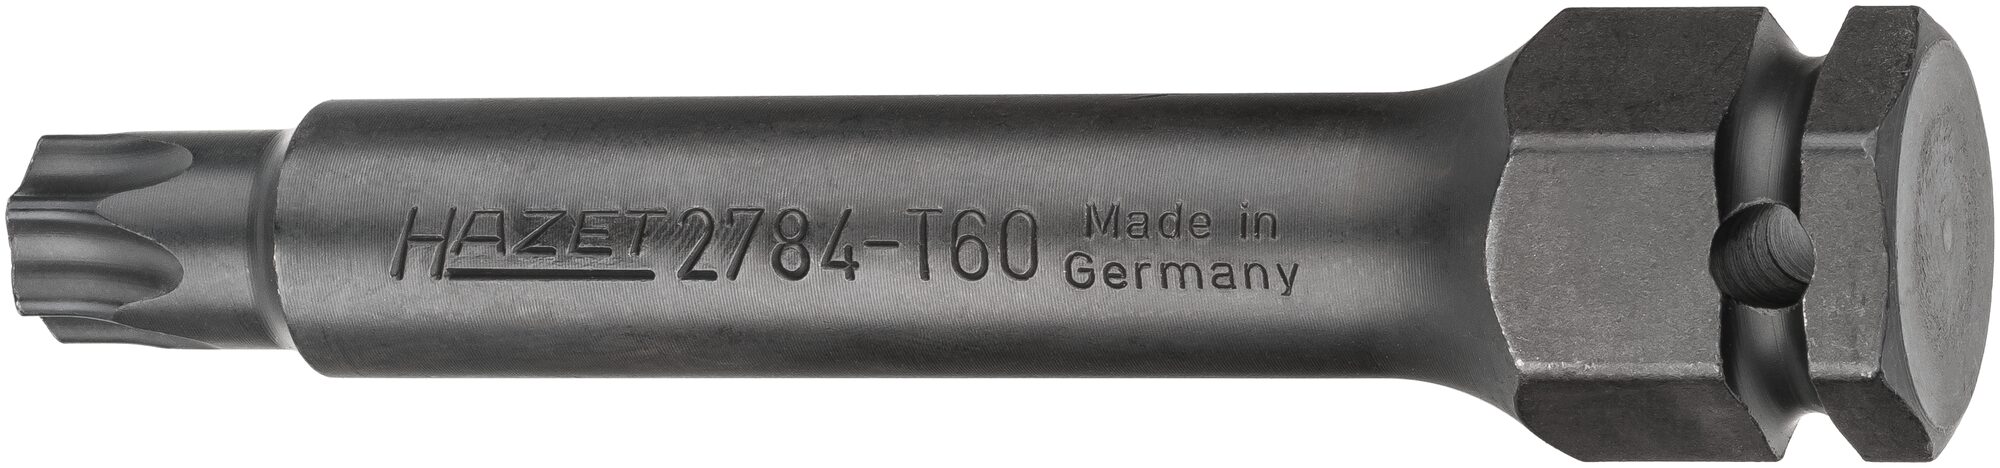 HAZET Ersatzklinge 2784-T60 · 120 mm